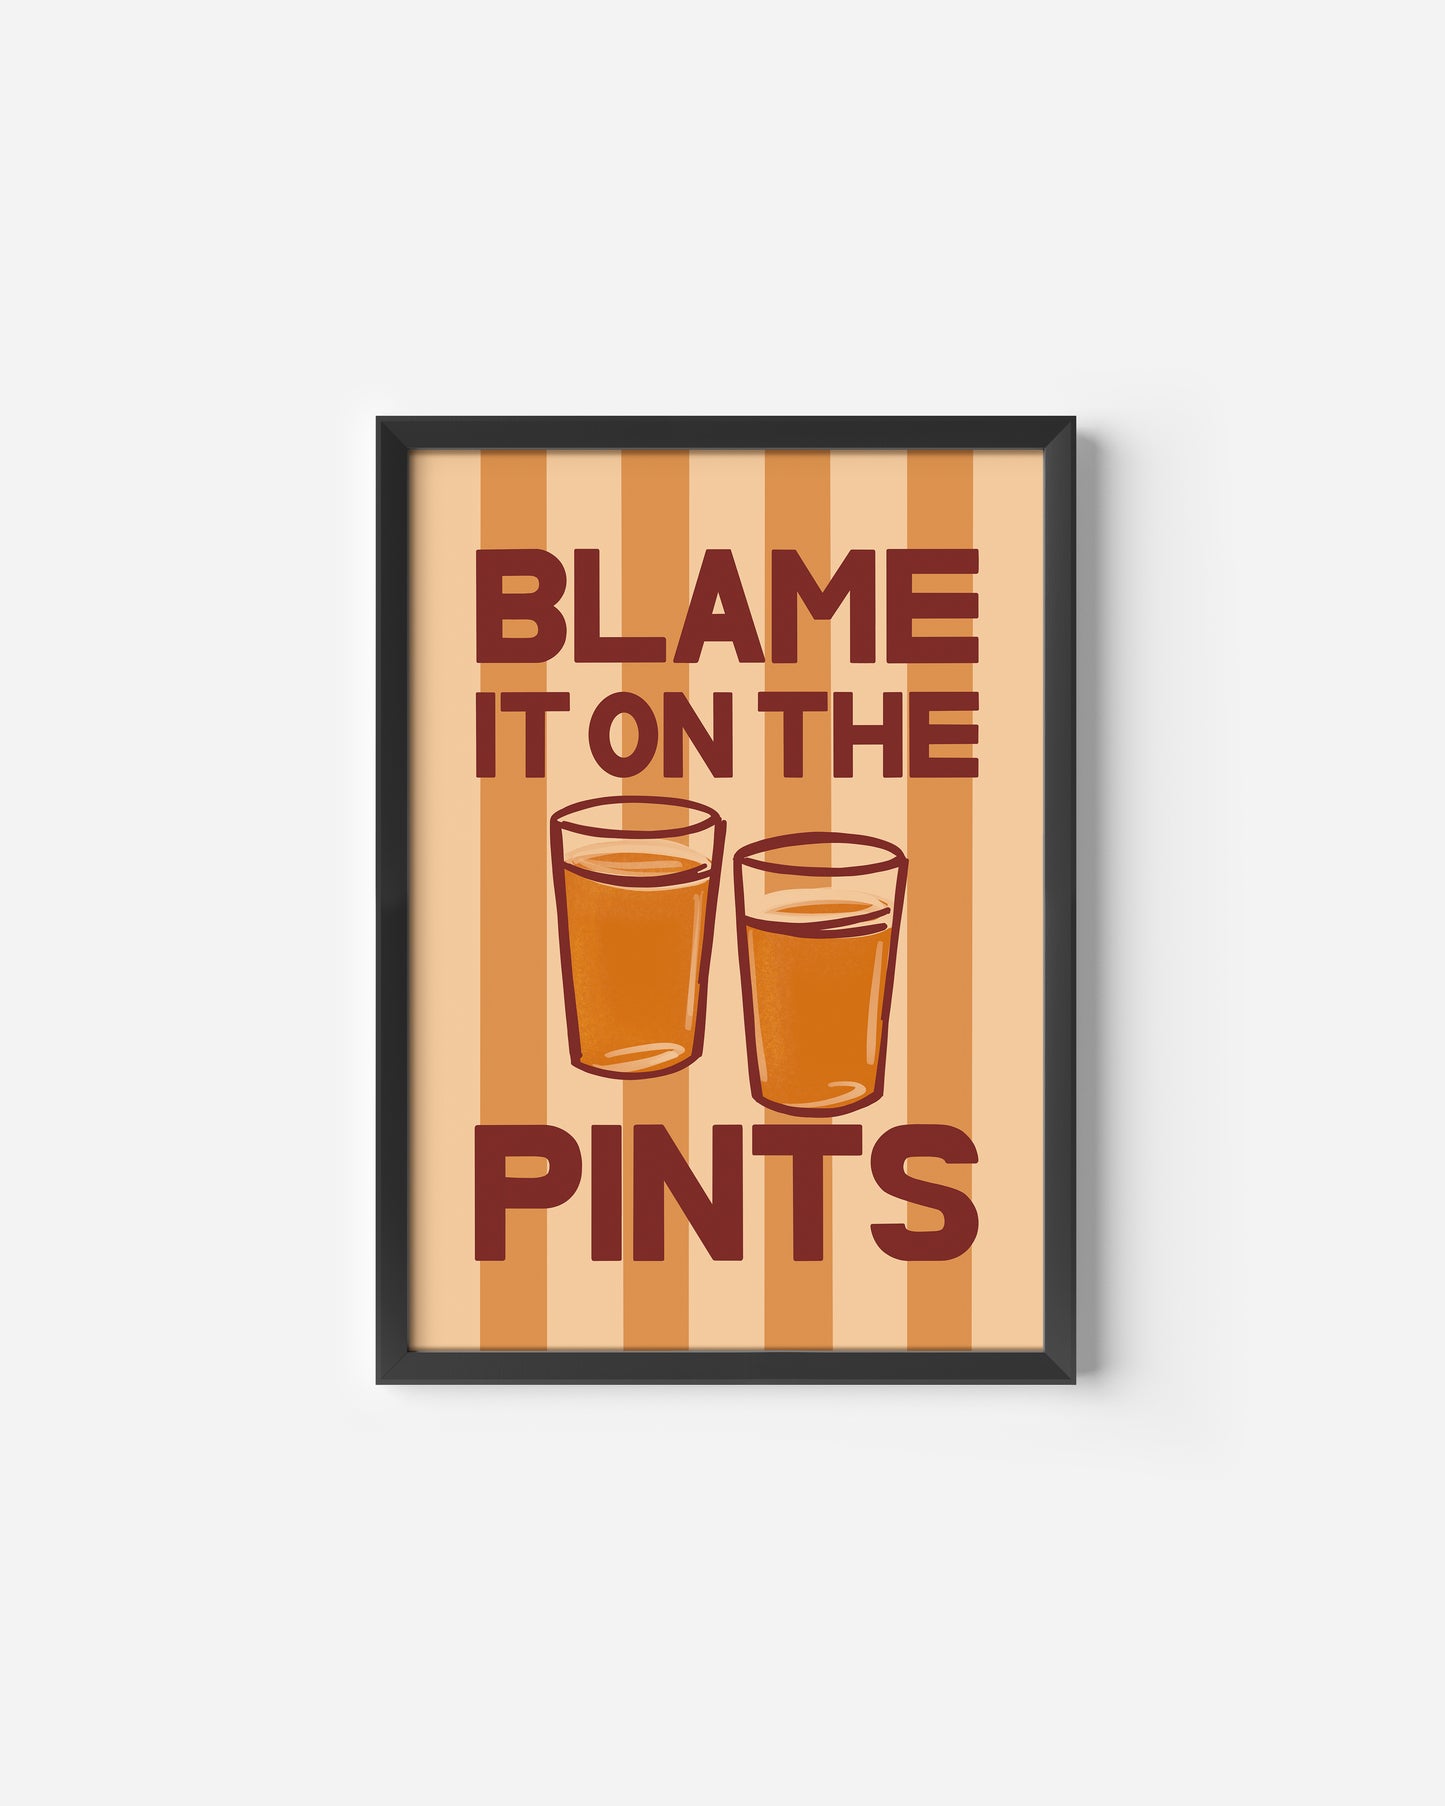 Blame it on the Pints Print